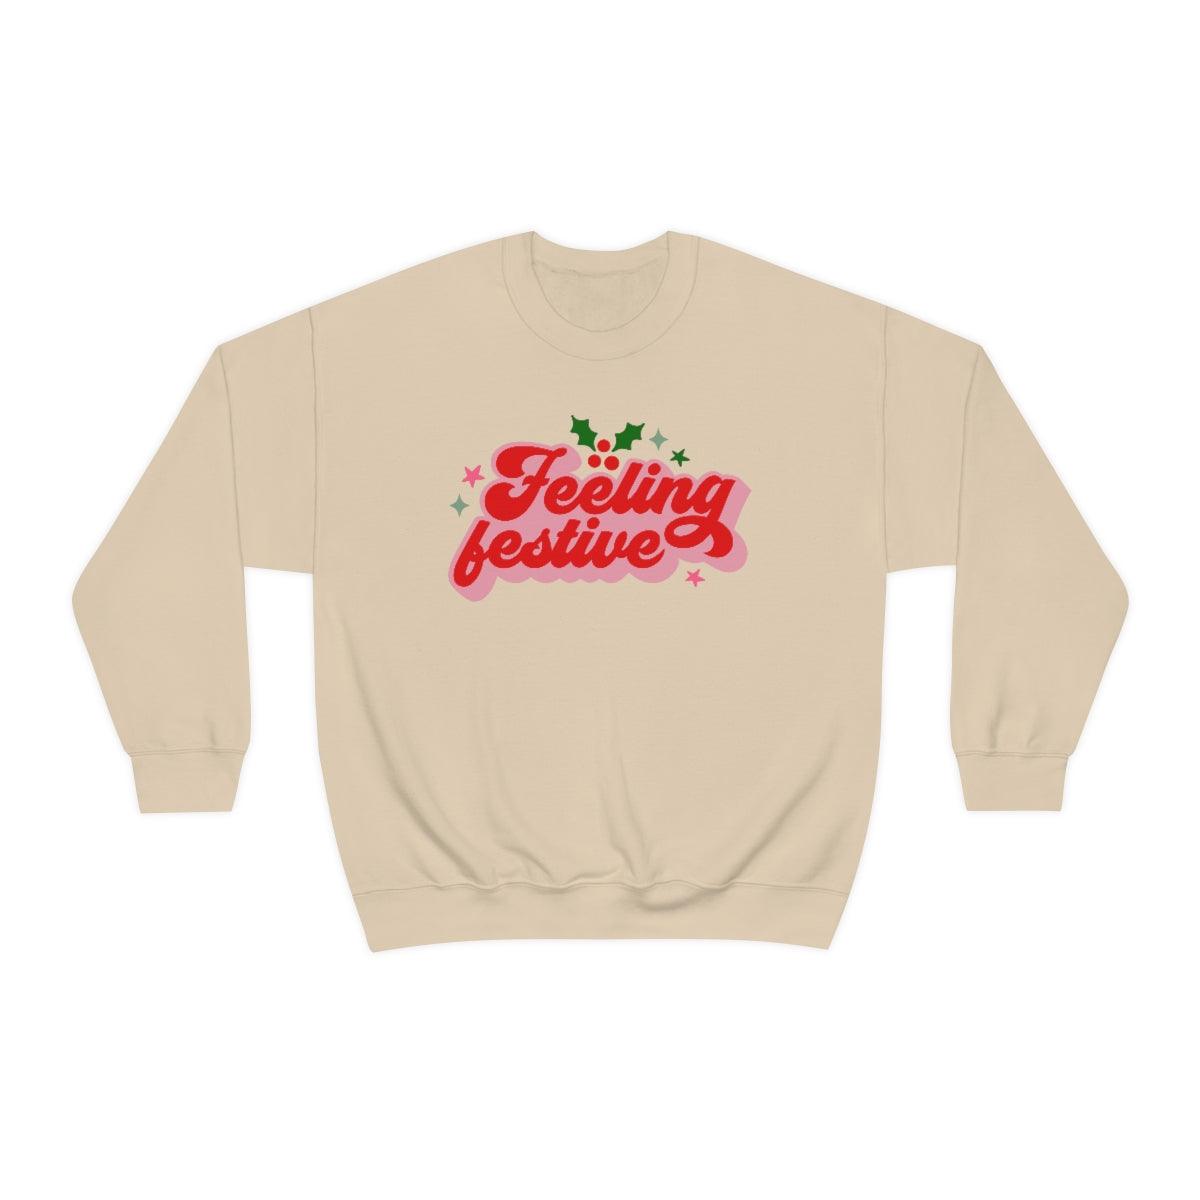 Retro Feeling Festive Christmas Crewneck Sweater